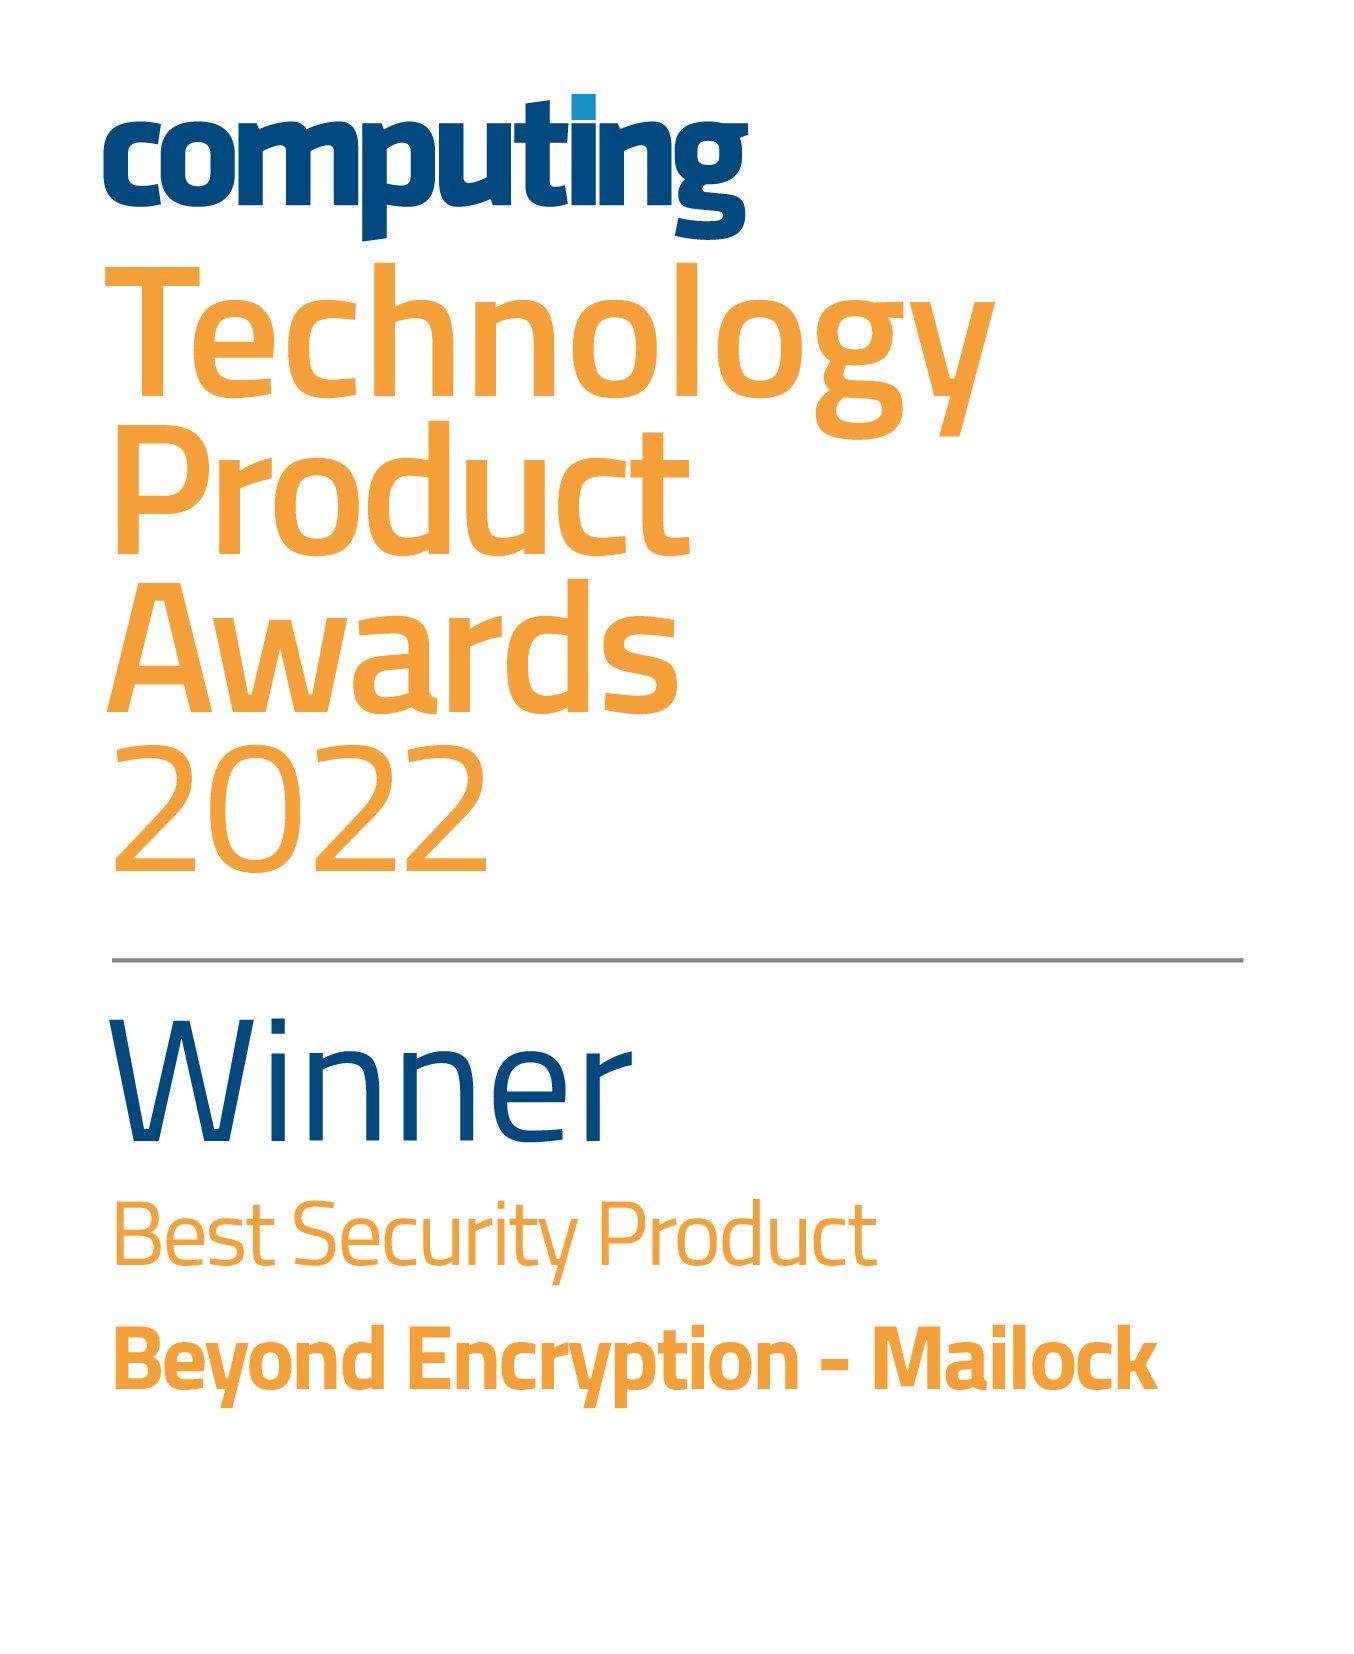 Computing technology product award